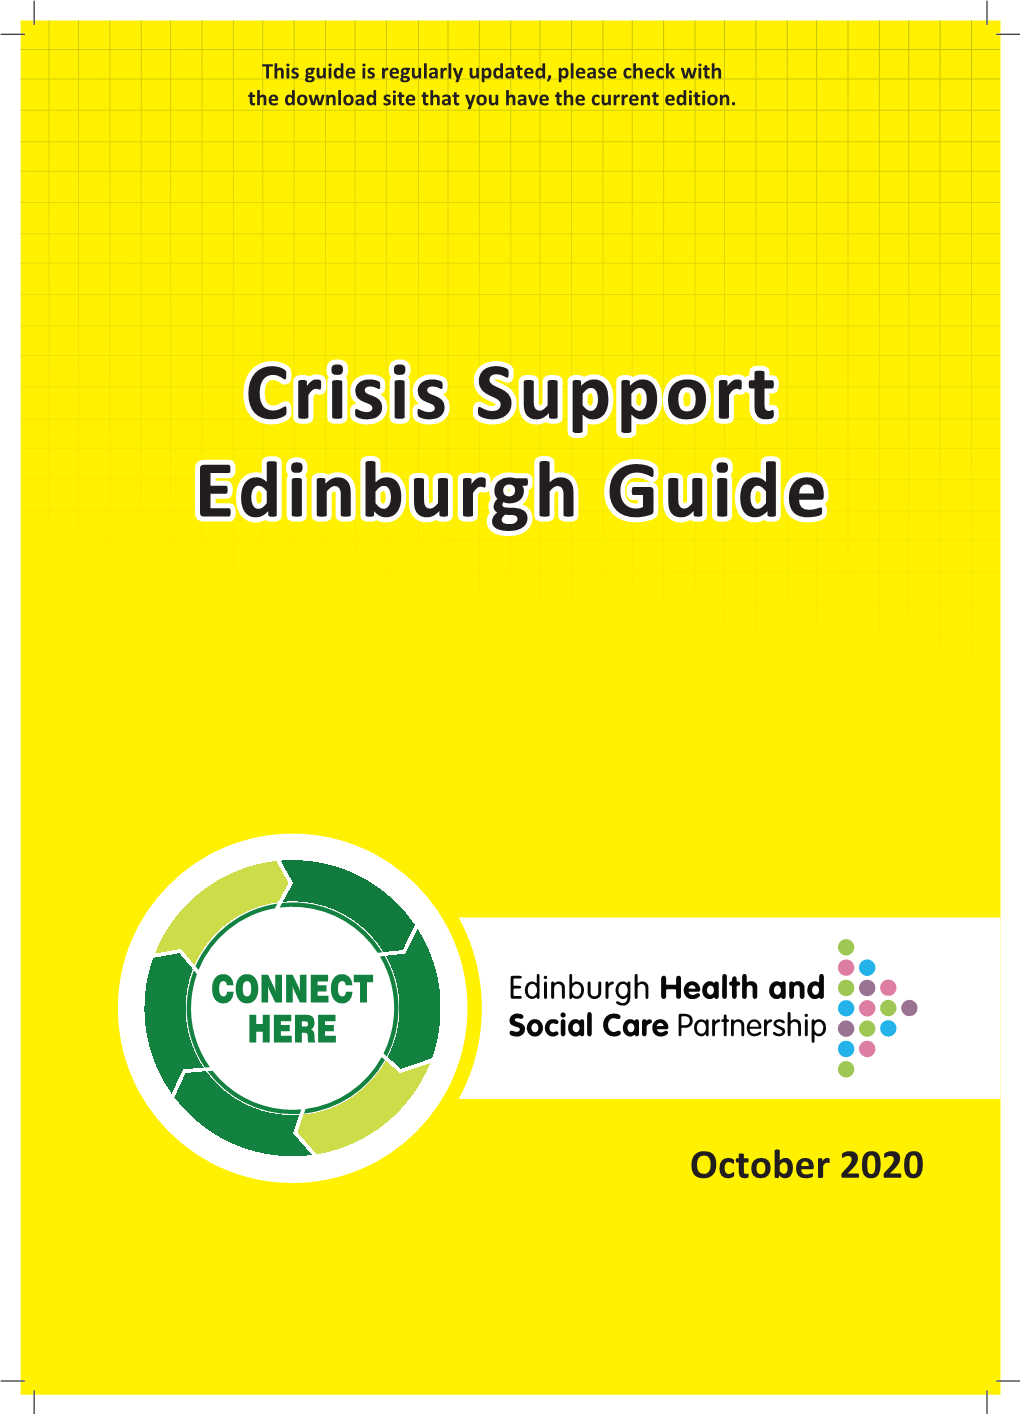 Crisis Support Edinburgh Guide